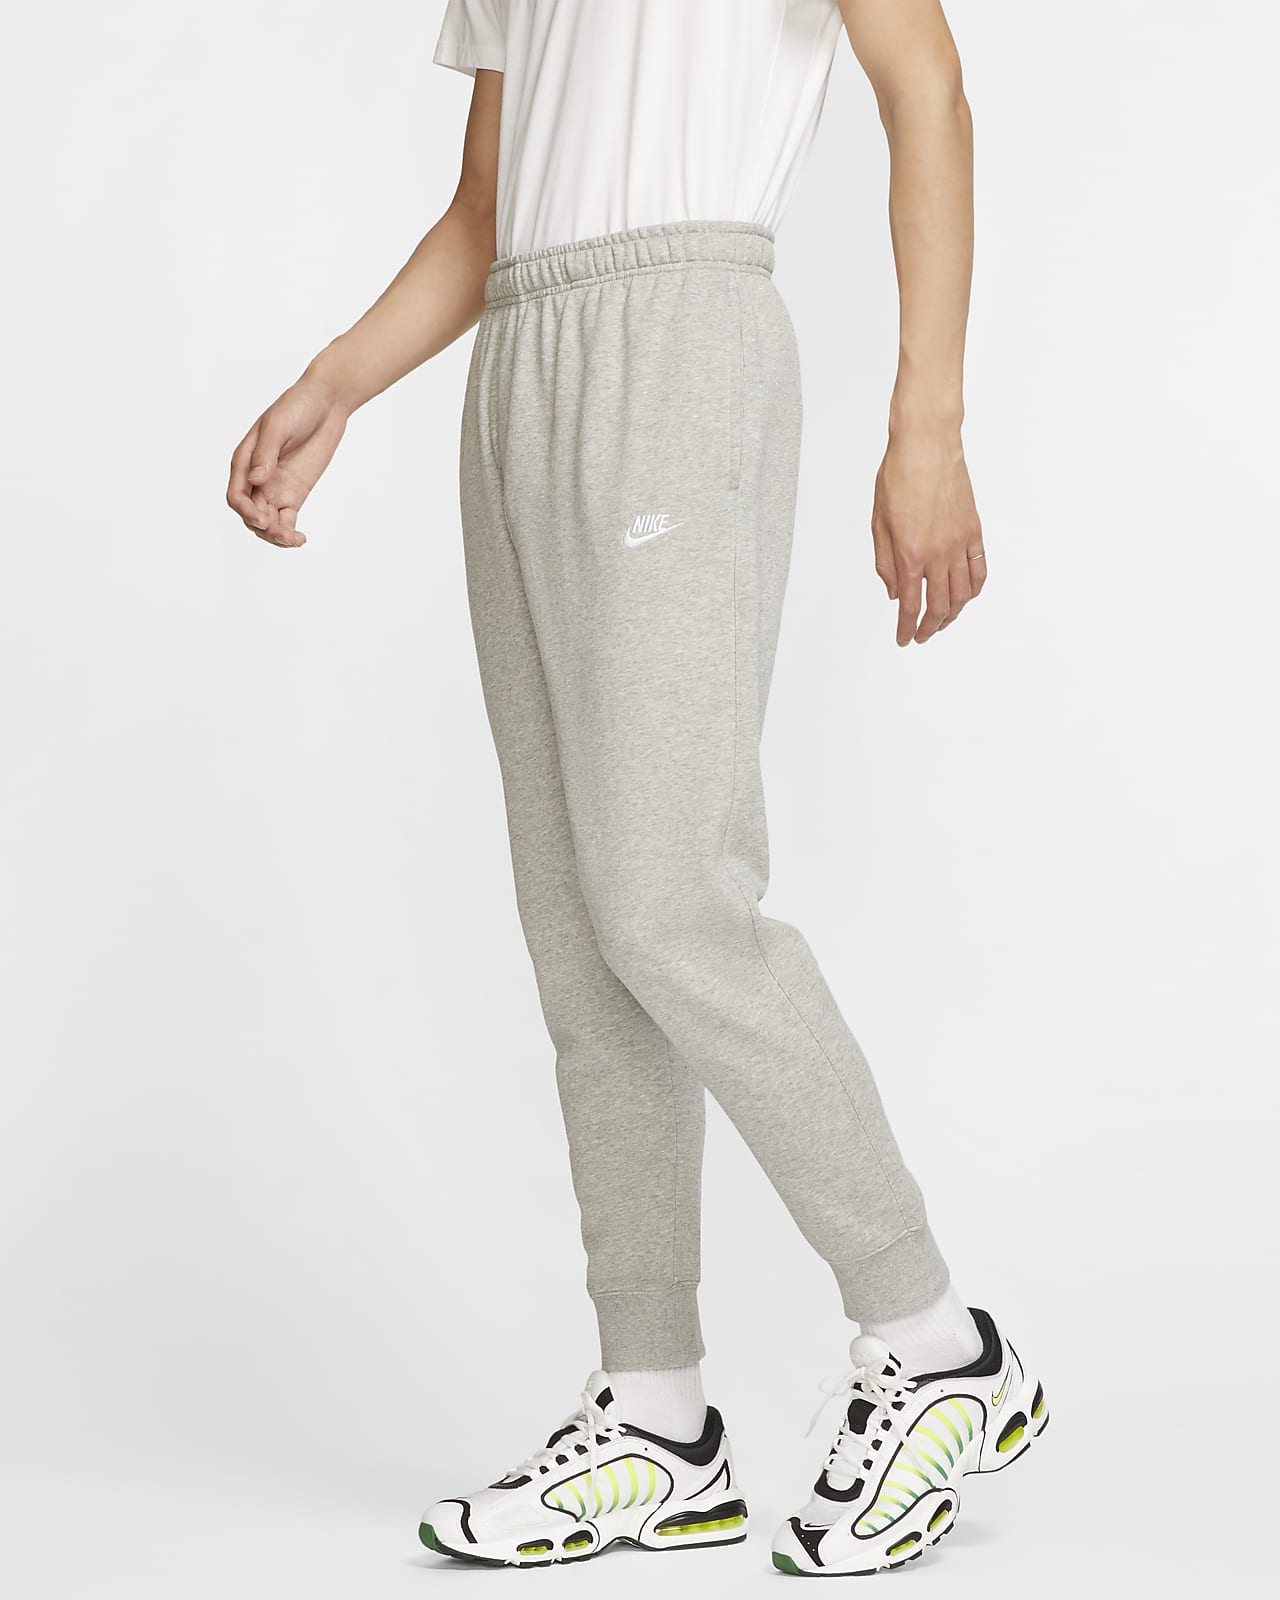 Pantaloni jogger Nike Sportswear Club – Uomo